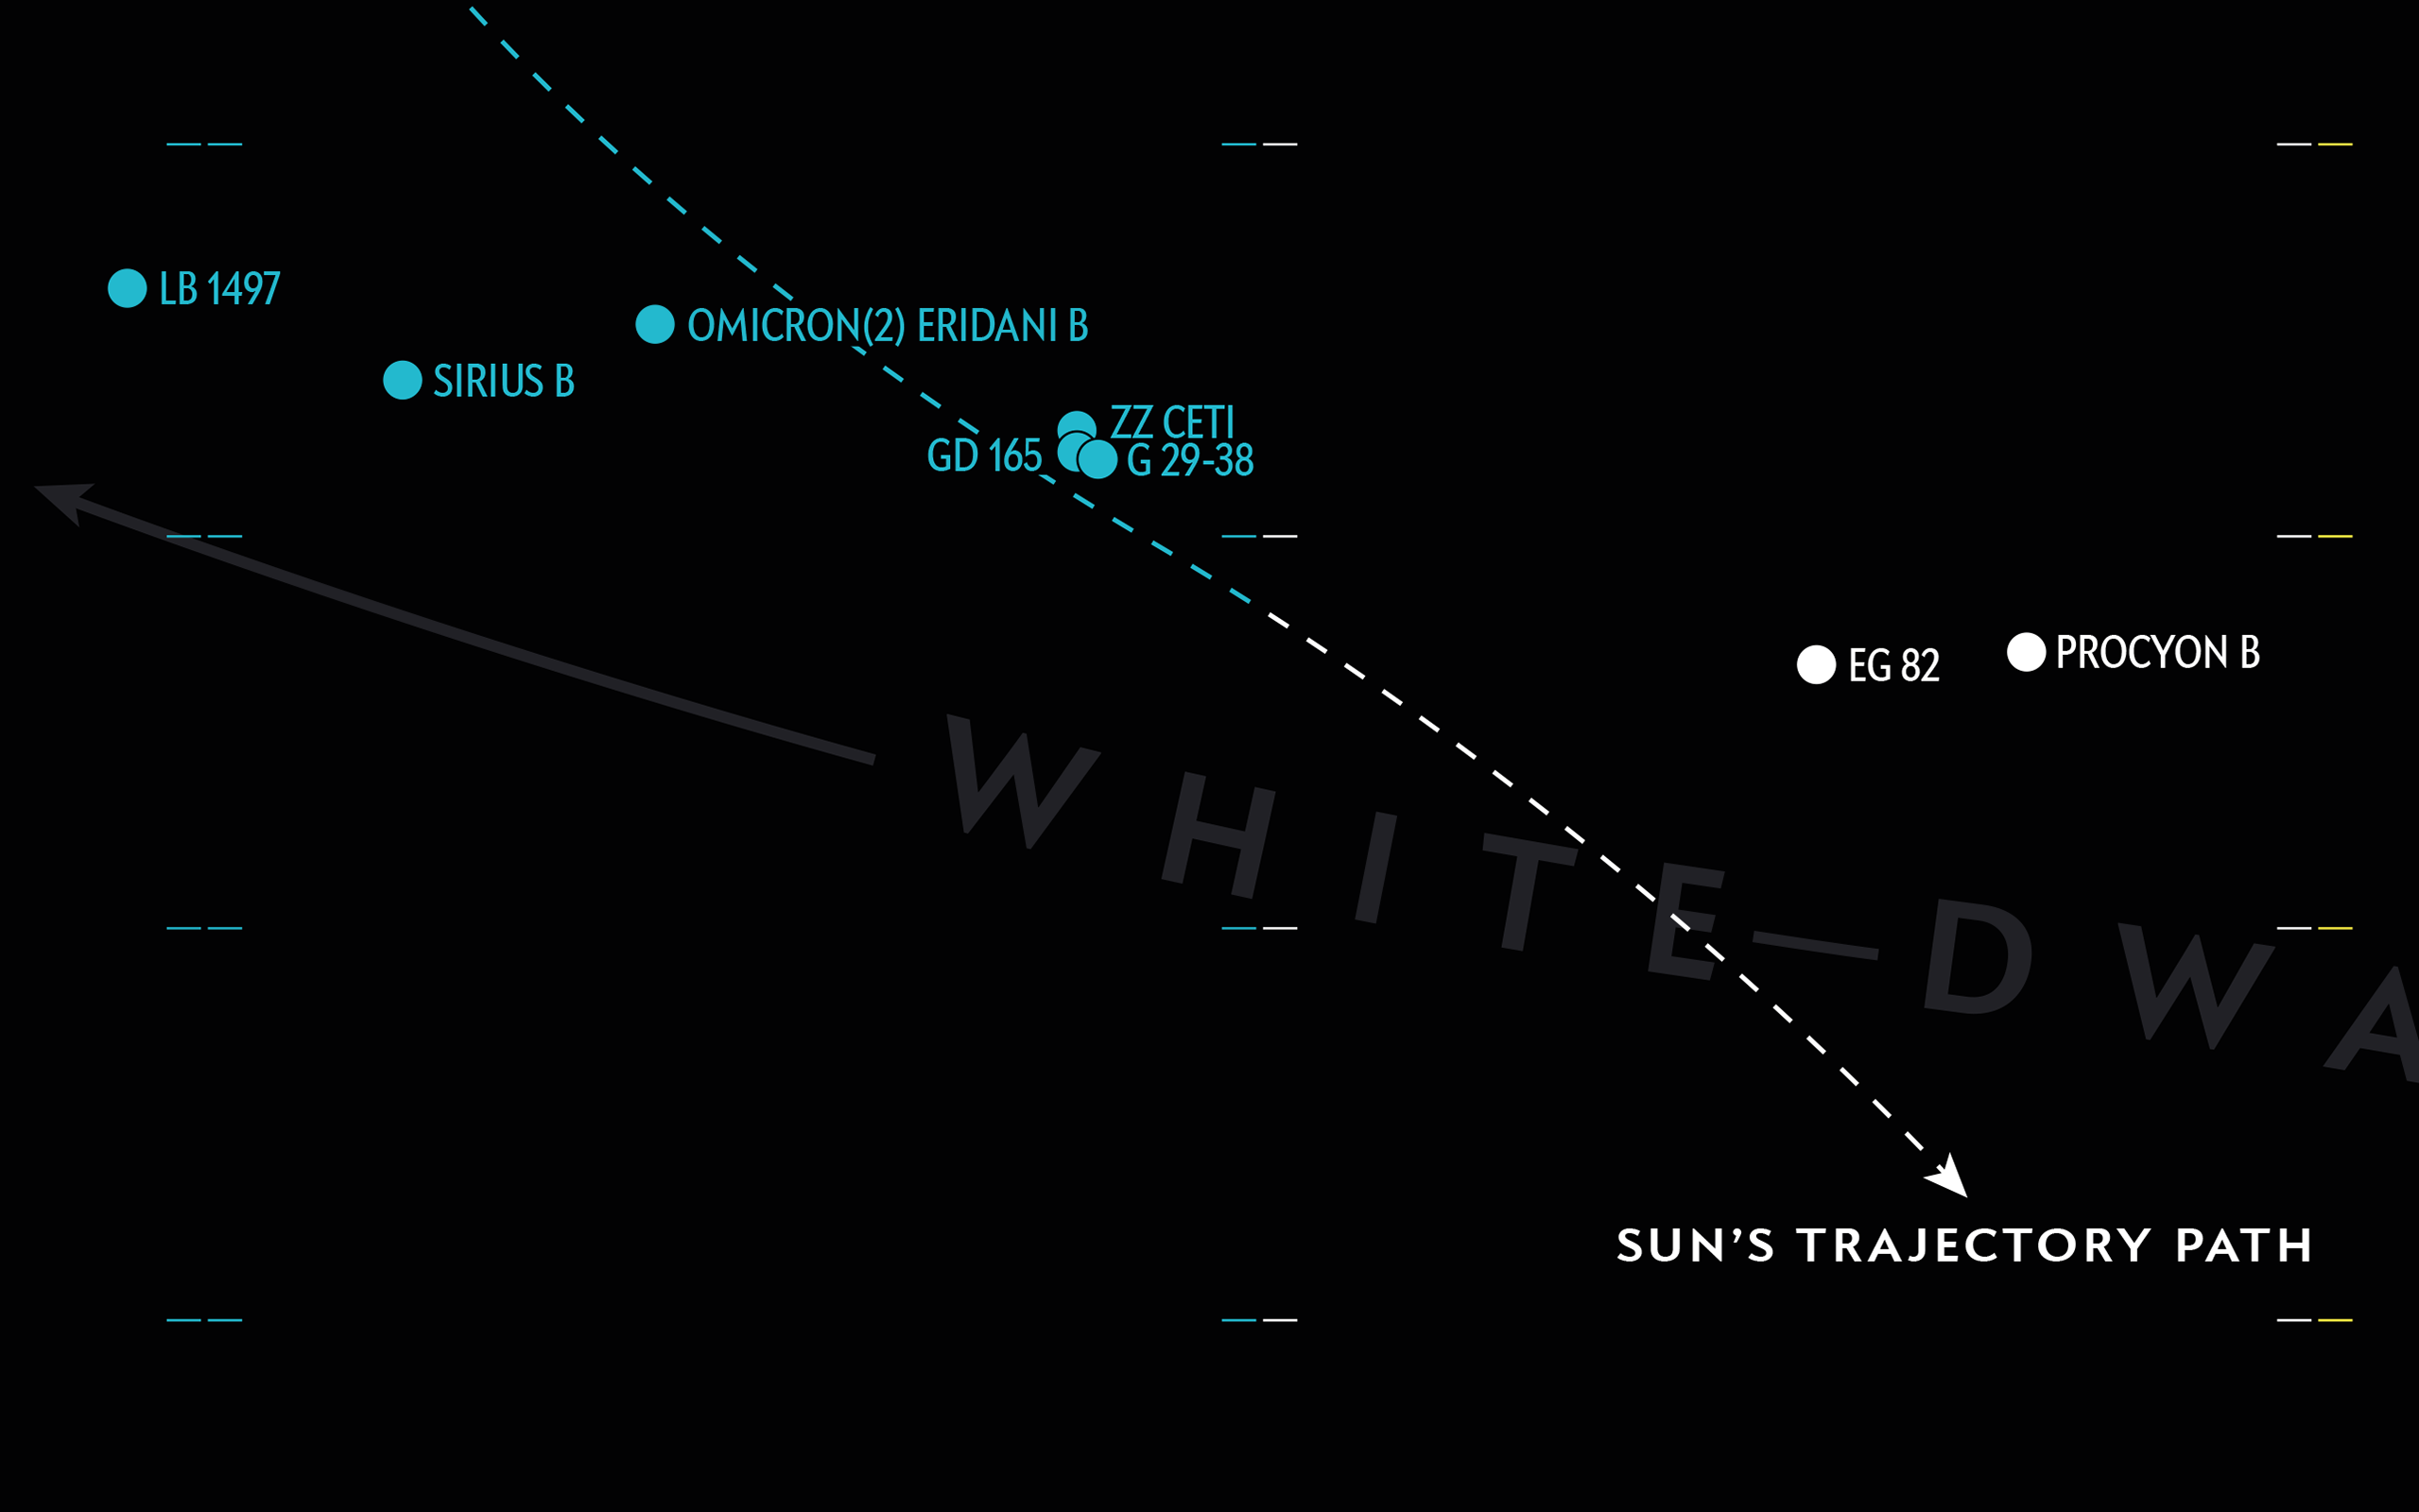 Hertzsprung-Russell (HR) Diagram Illustration #6